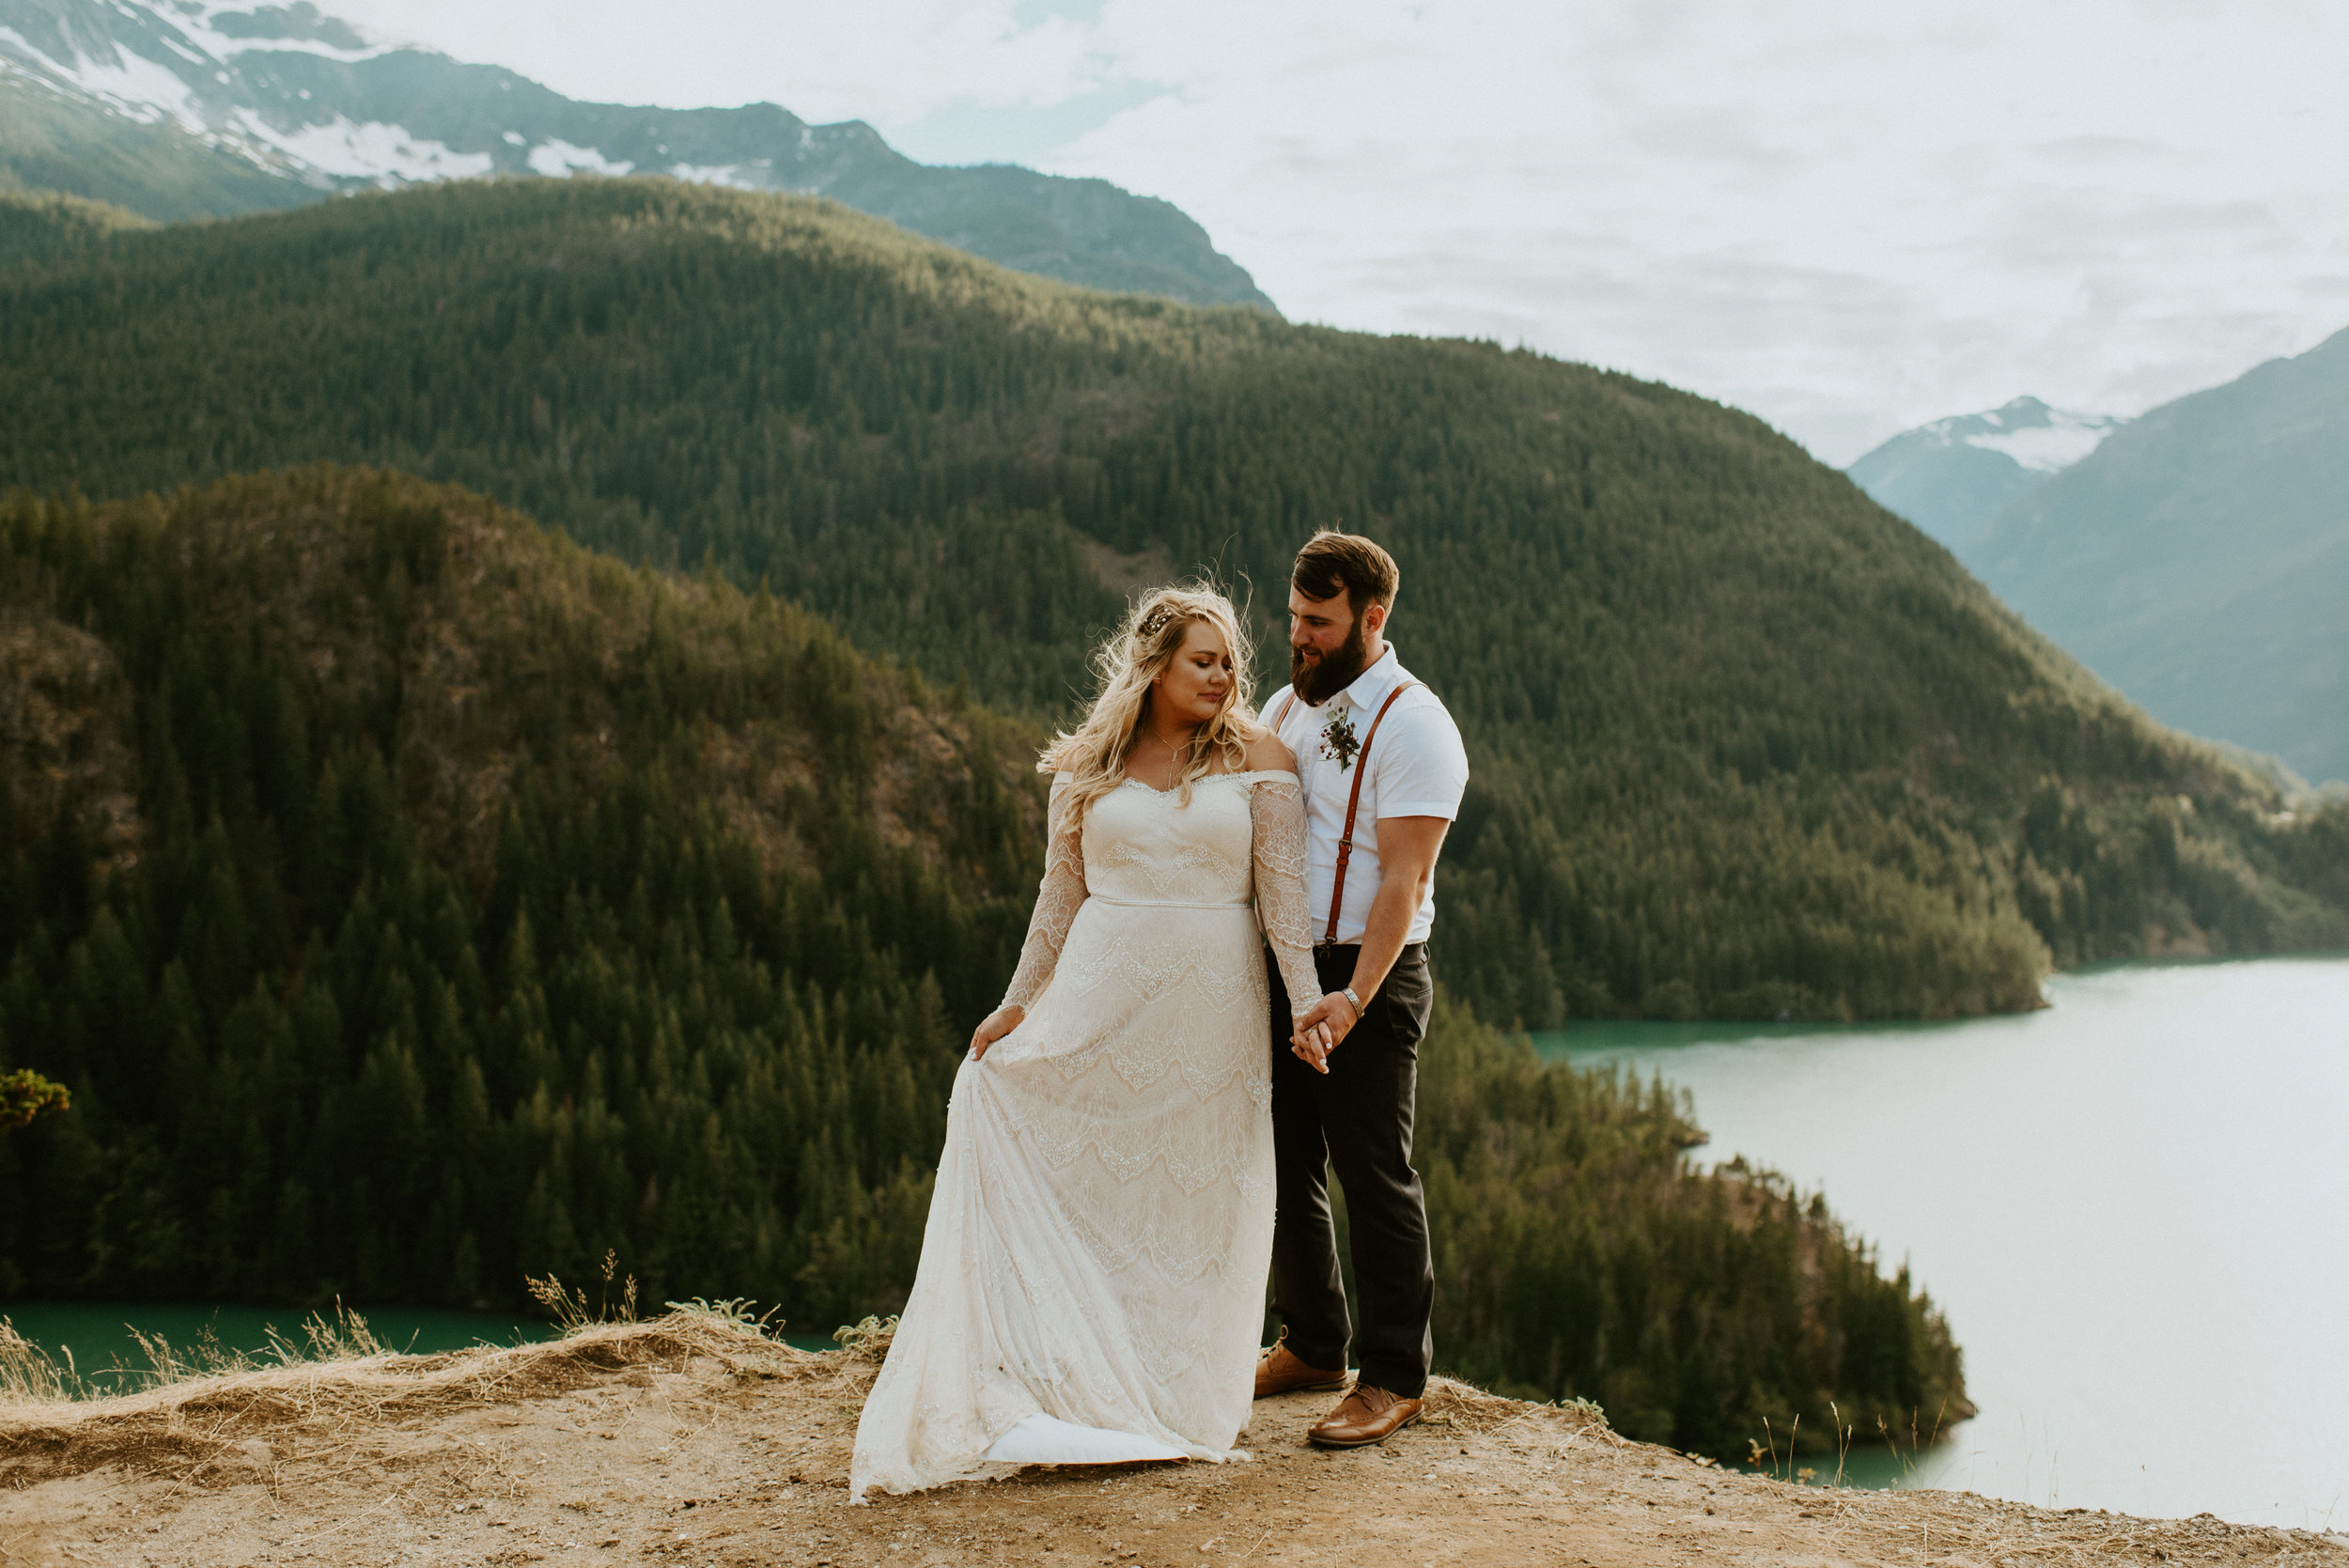 Kelsea + Perry - Diablo Lake Elopement - Kamra Fuller Photography - Seattle Elopement Photographer - North Cascades Elopement Photographer - Mt. Baker Wedding Photographer